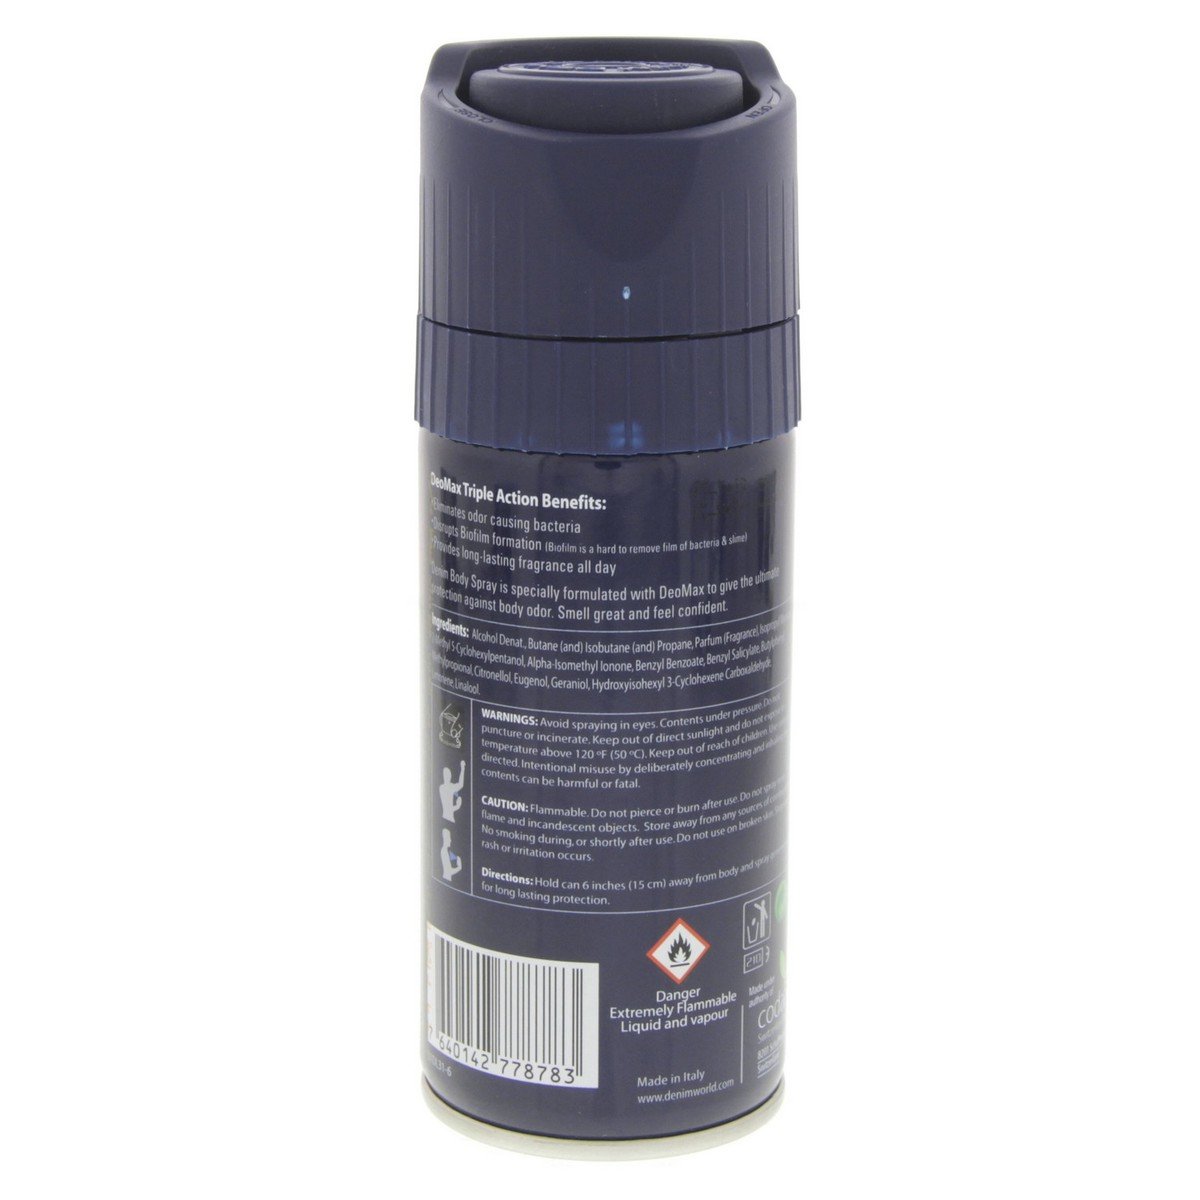 Denim River Deo Body Spray for Men 150 ml